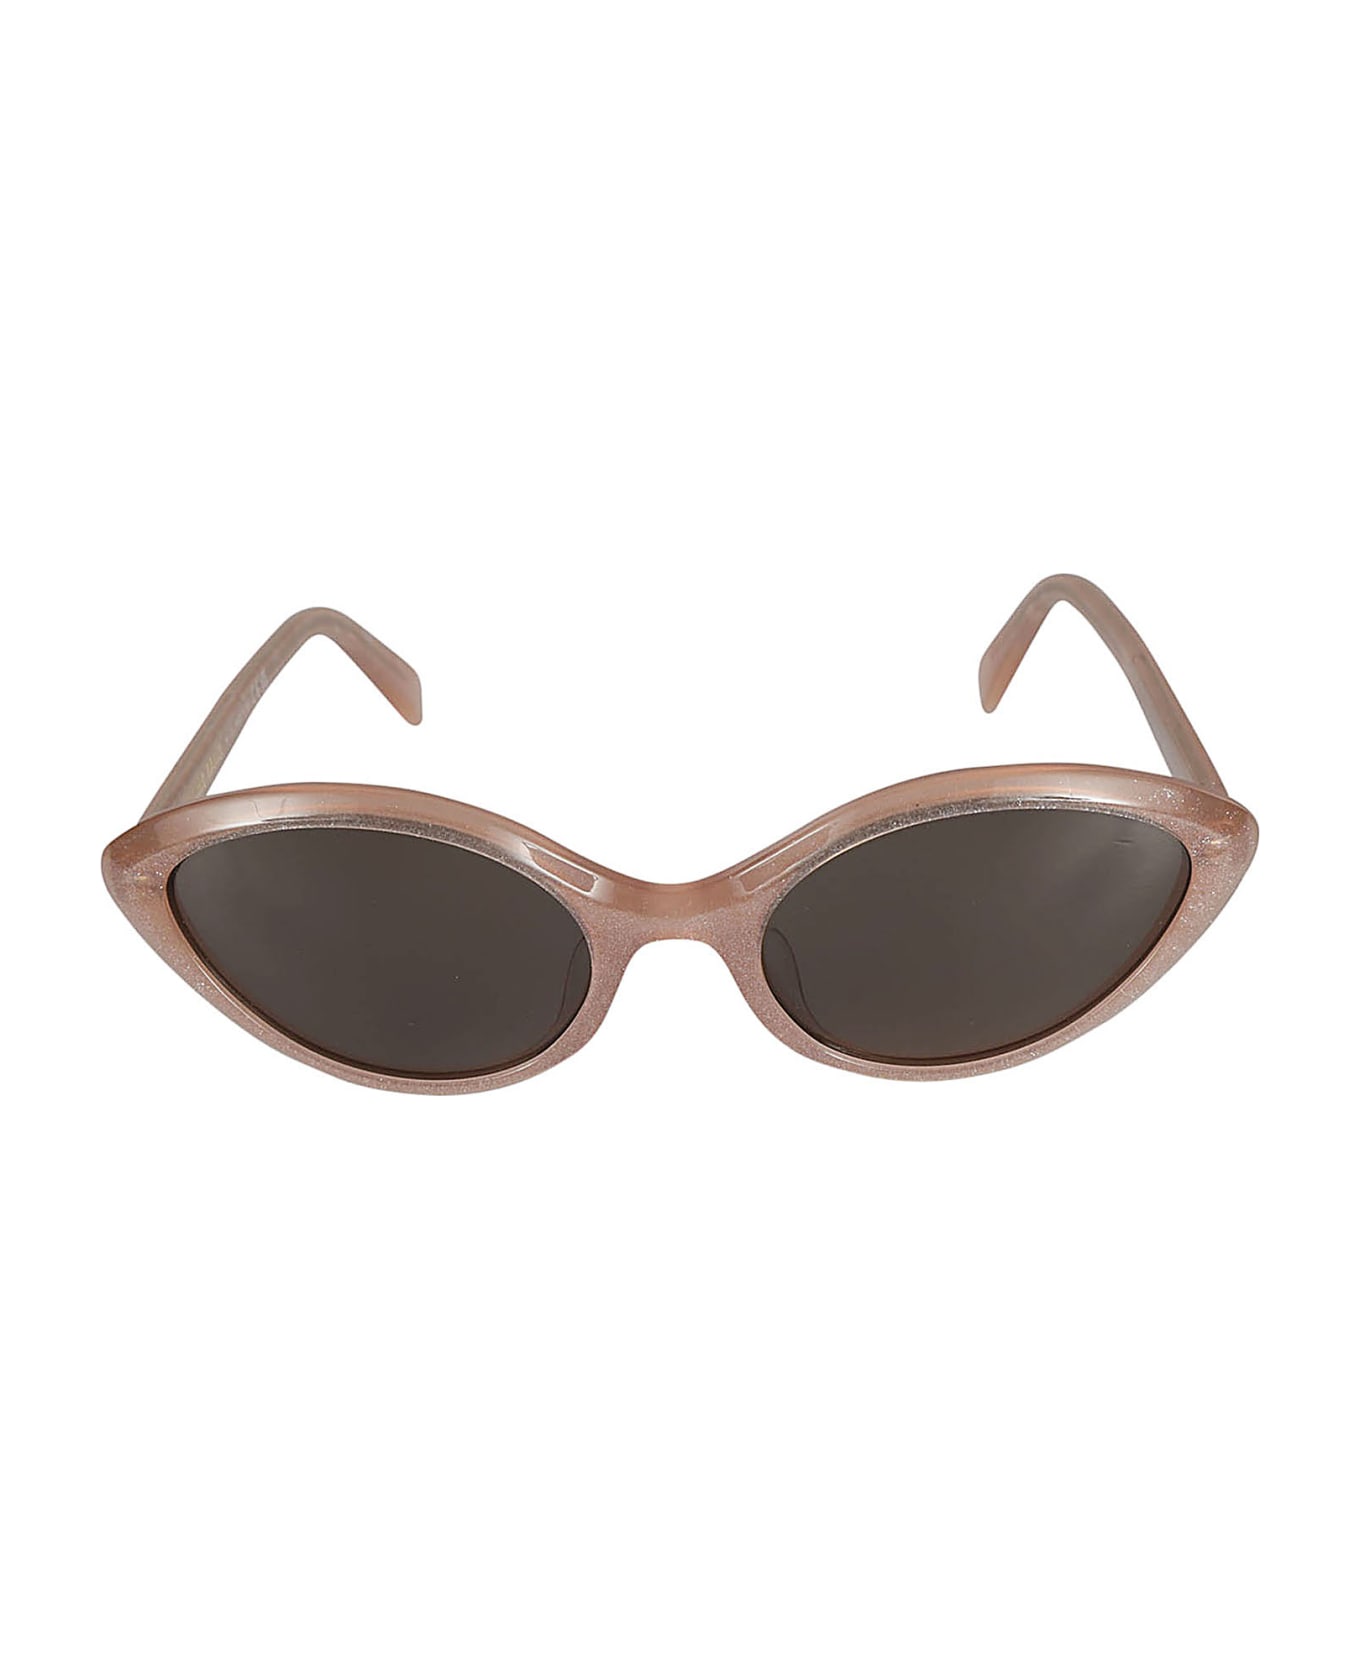 Celine Embellished Cat-eye Sunglasses - 74n サングラス